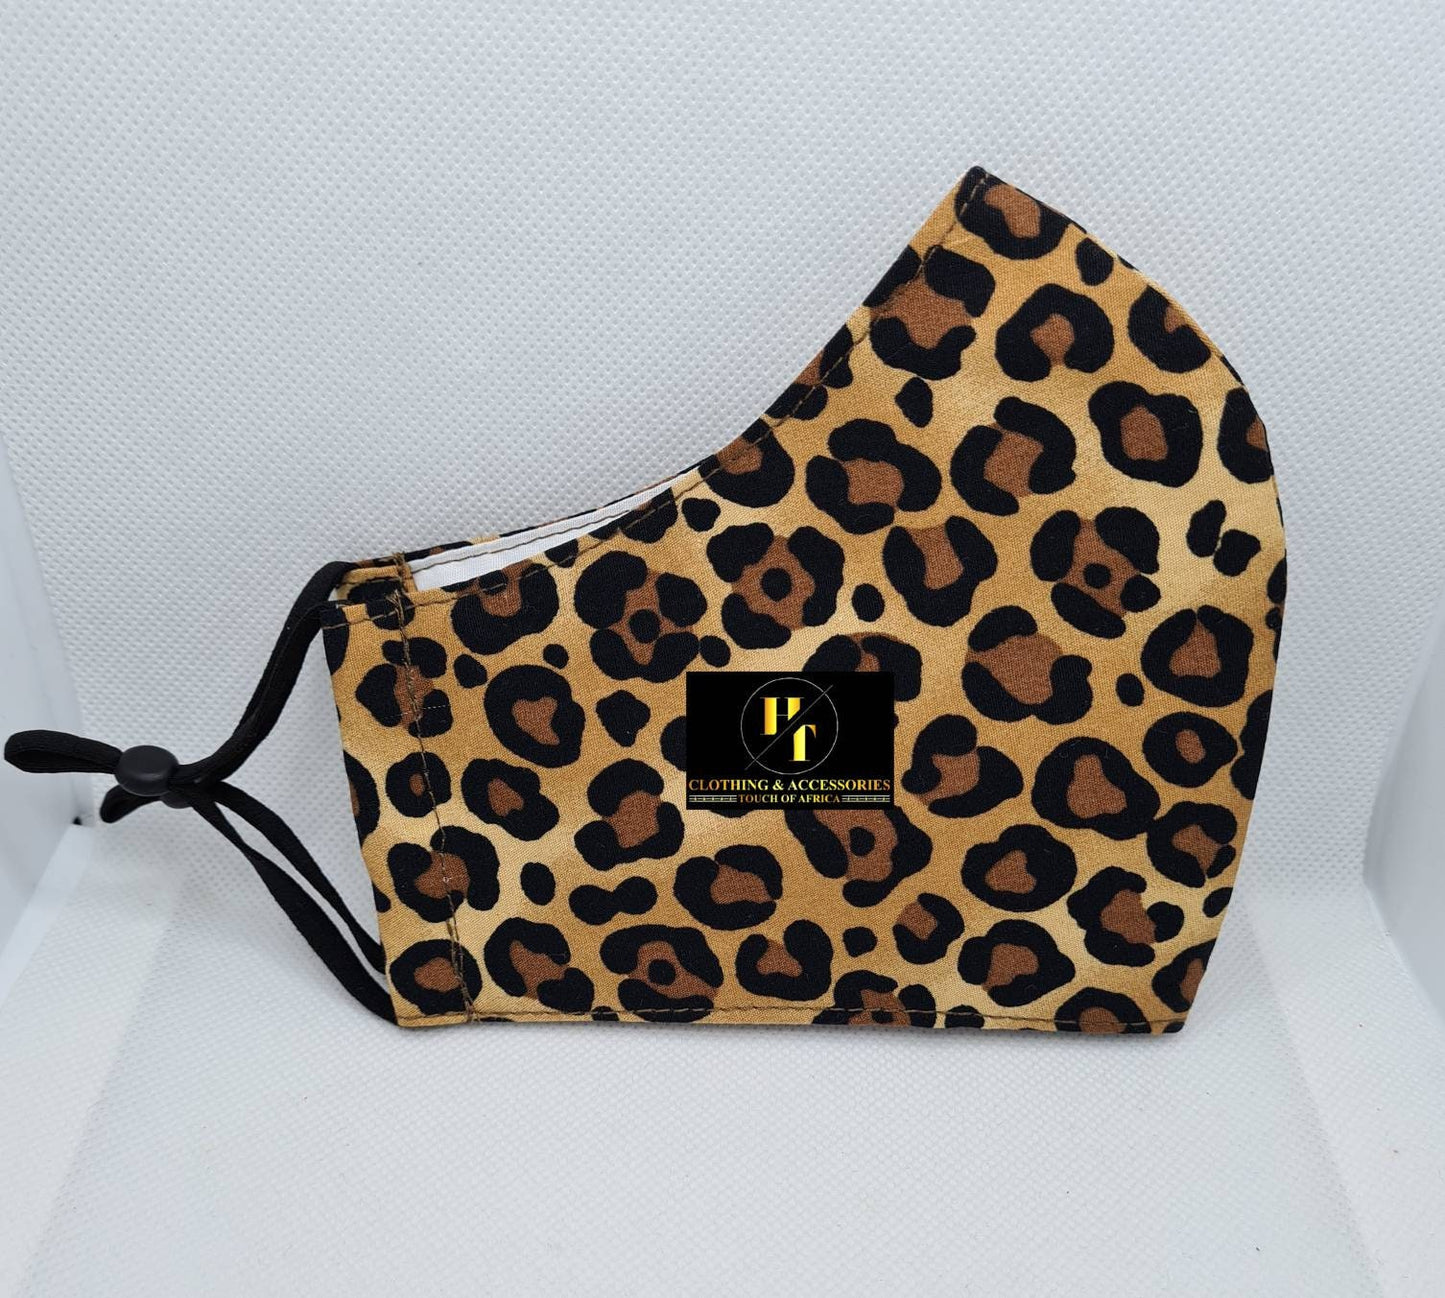 Face Mask Leopard Animal Print Cotton Washable Reusable Mouth Nose Coveringn 100% Cotton Breathable Reusable washable Masks Adjustable Cord